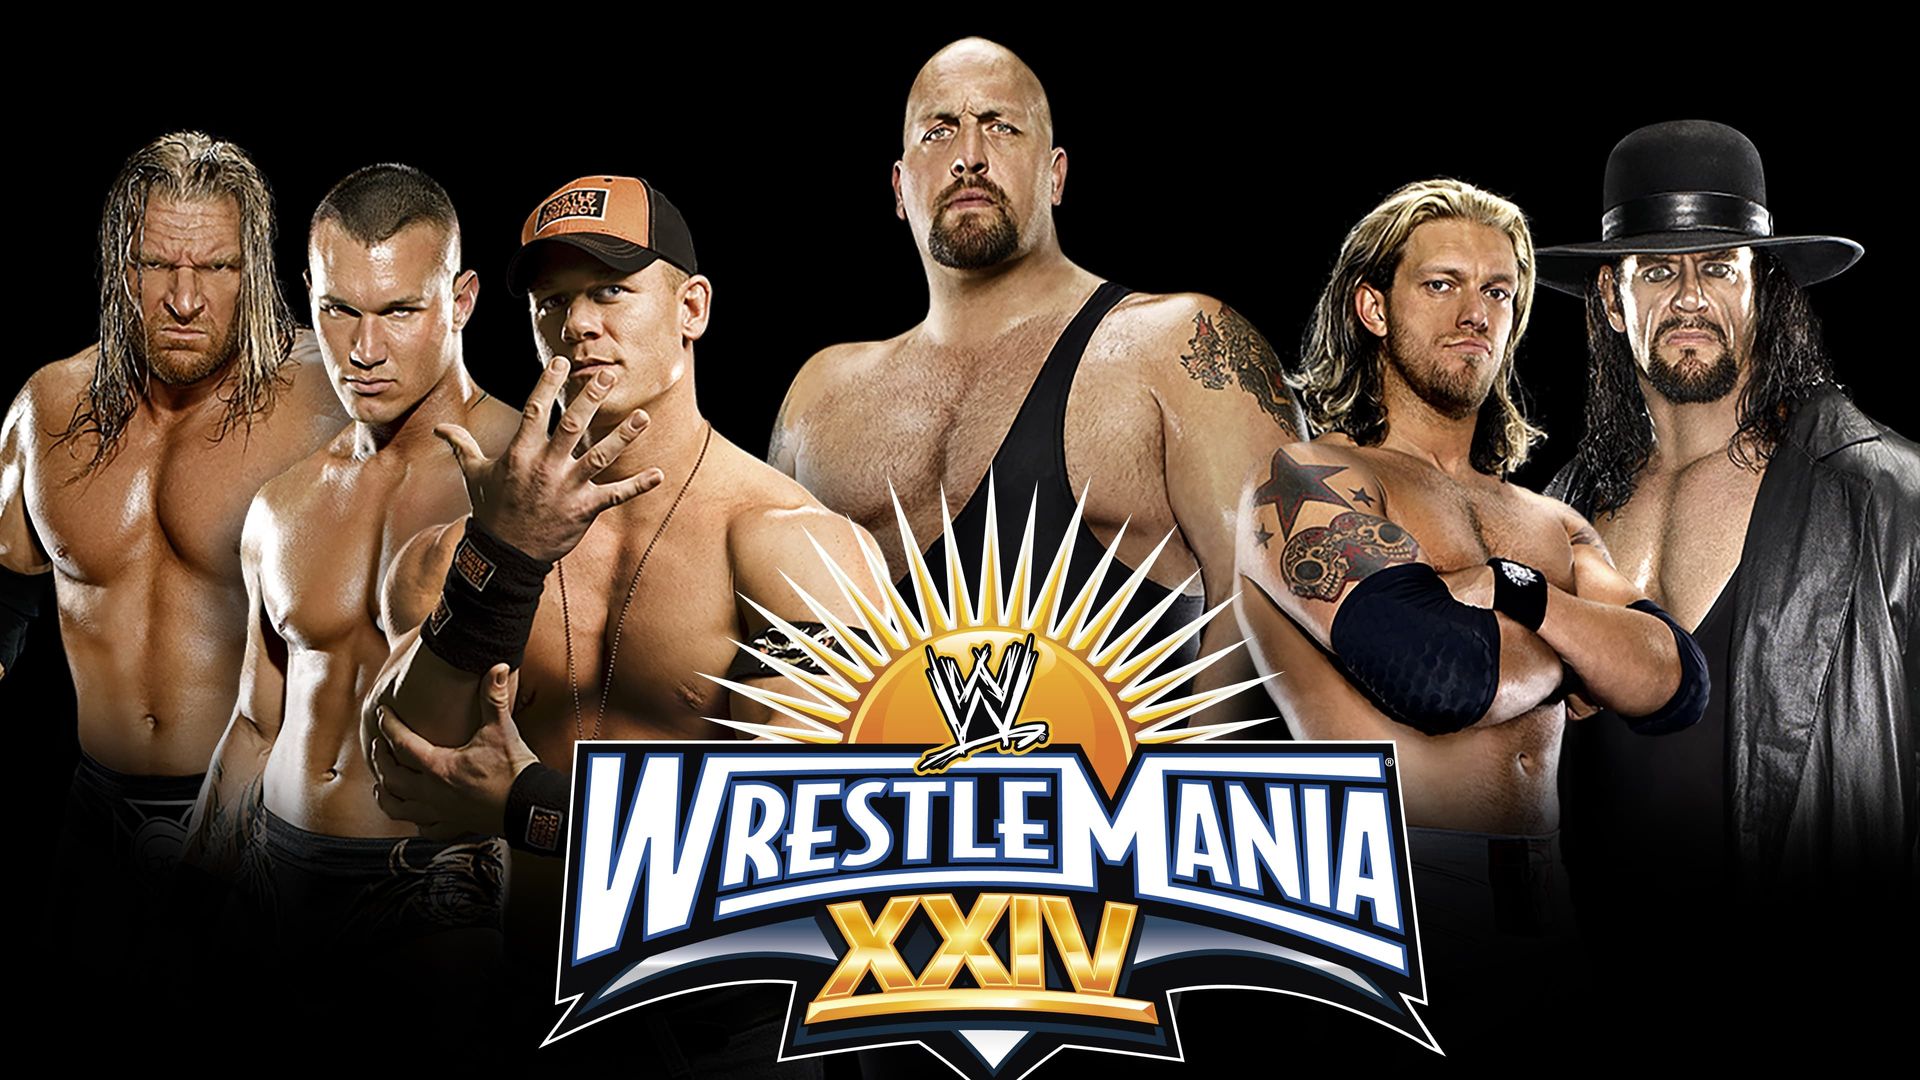 WrestleMania XXIV background